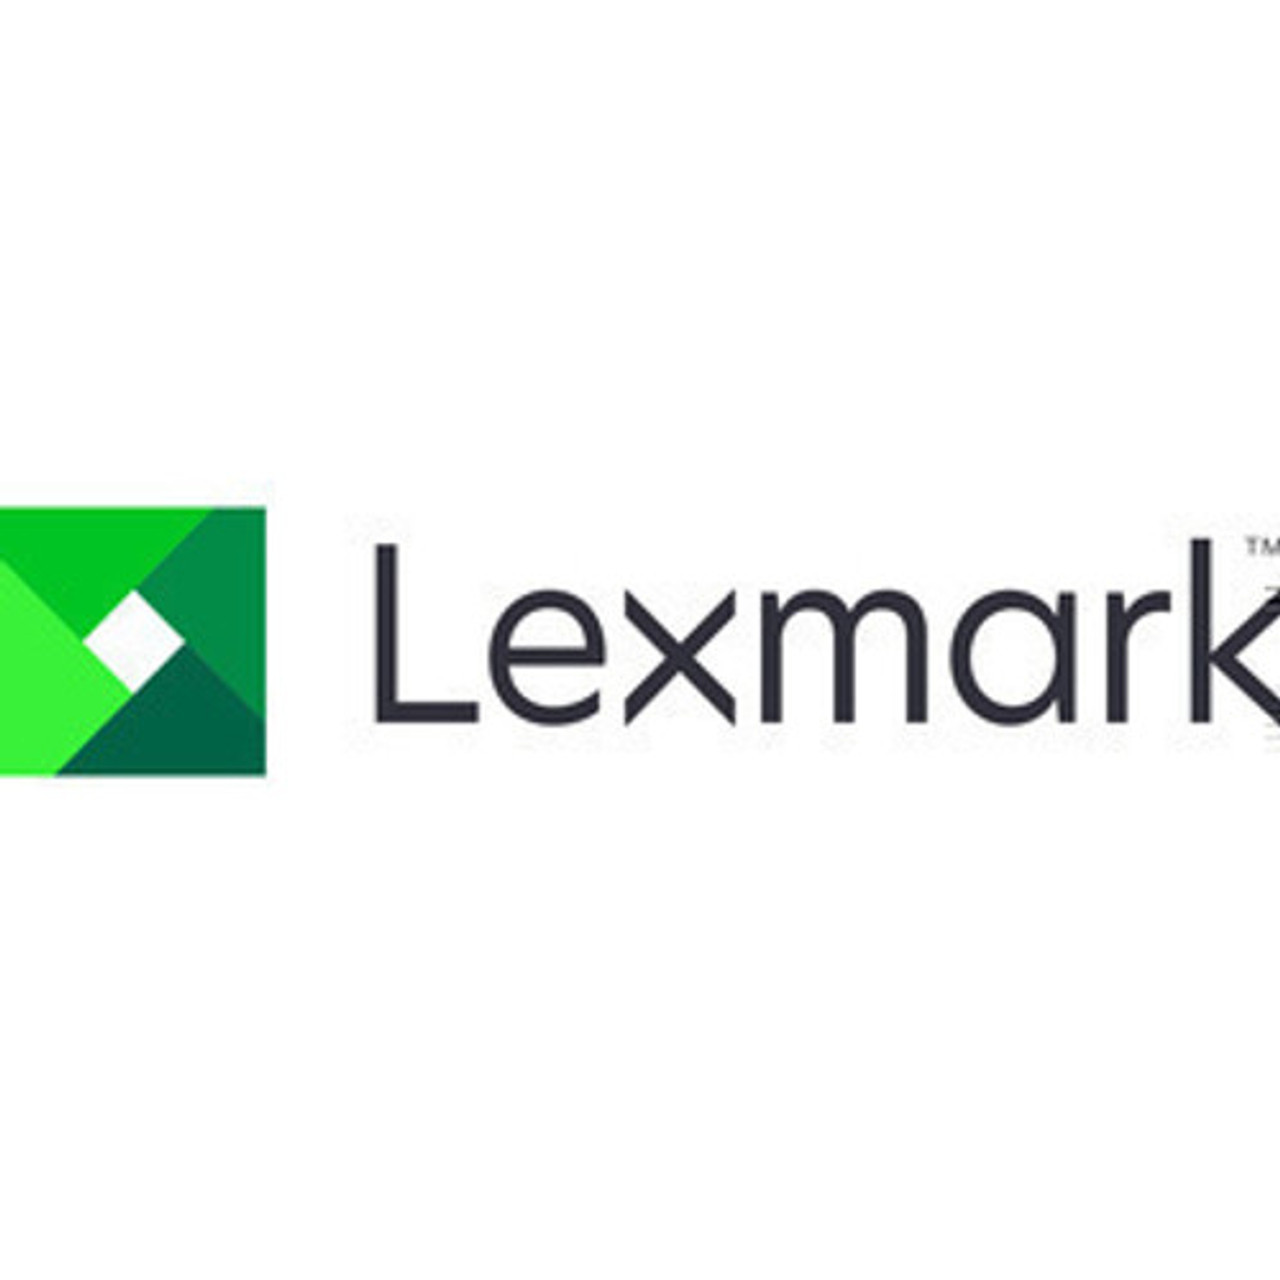 Lexmark - ADF pickup roller kit - forLexmark CX622, CX625, MC2640, MX522, MX622, XC4240, XM1246, XM3250 - 41X1326